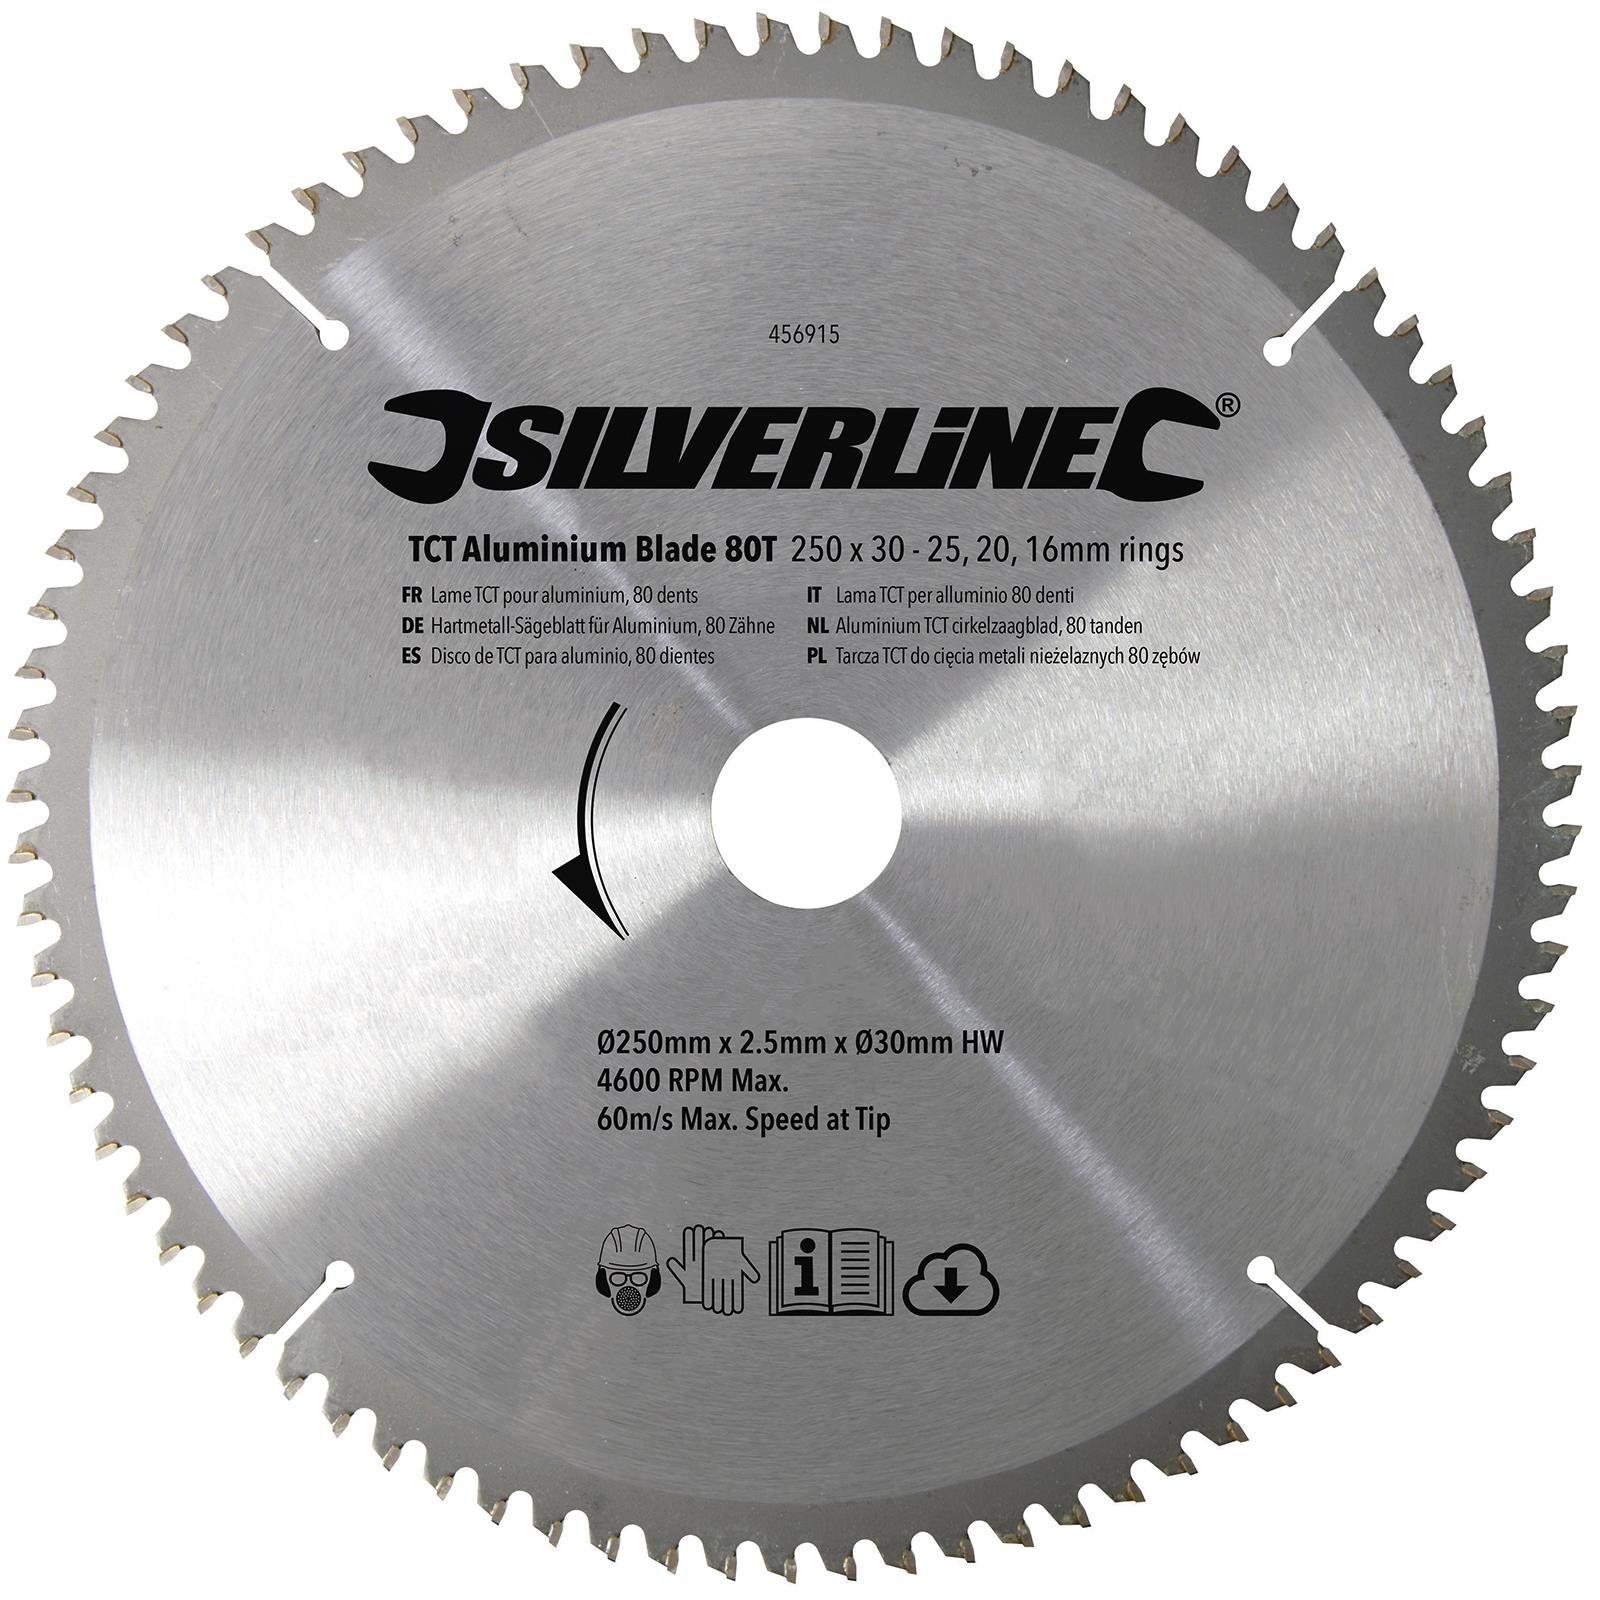 Silverline TCT Aluminium Circular Saw Blade 80T 250 x 30mm - 25 20 16mm Rings